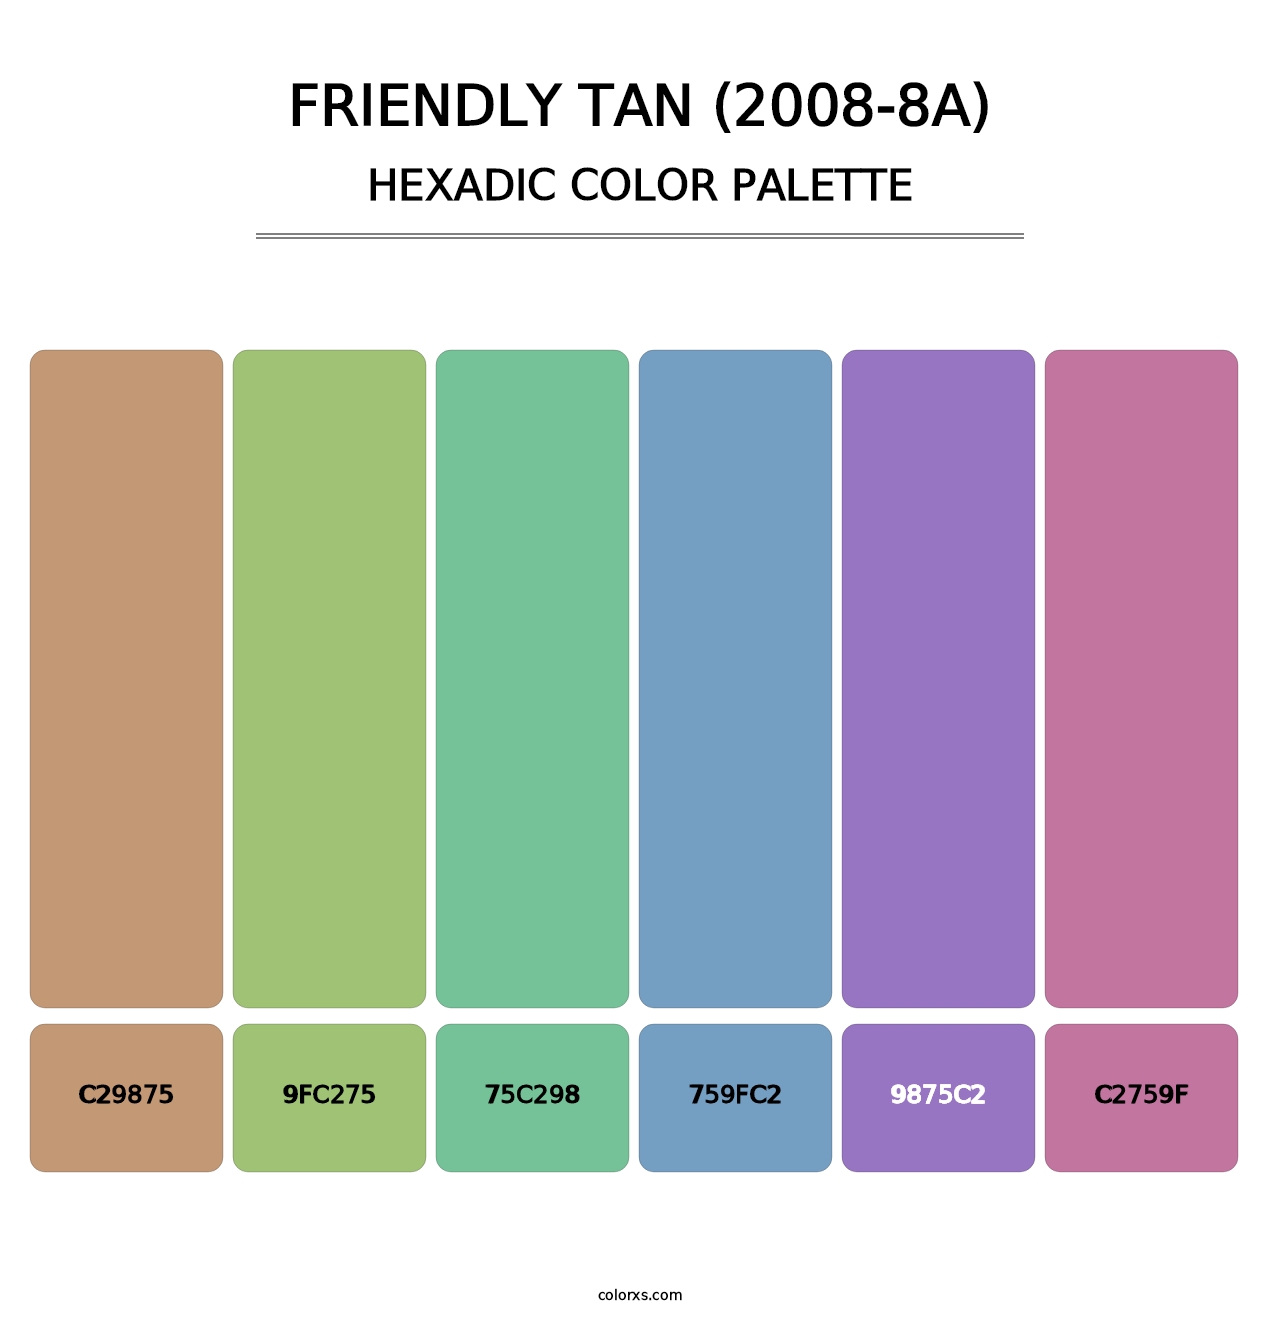 Friendly Tan (2008-8A) - Hexadic Color Palette